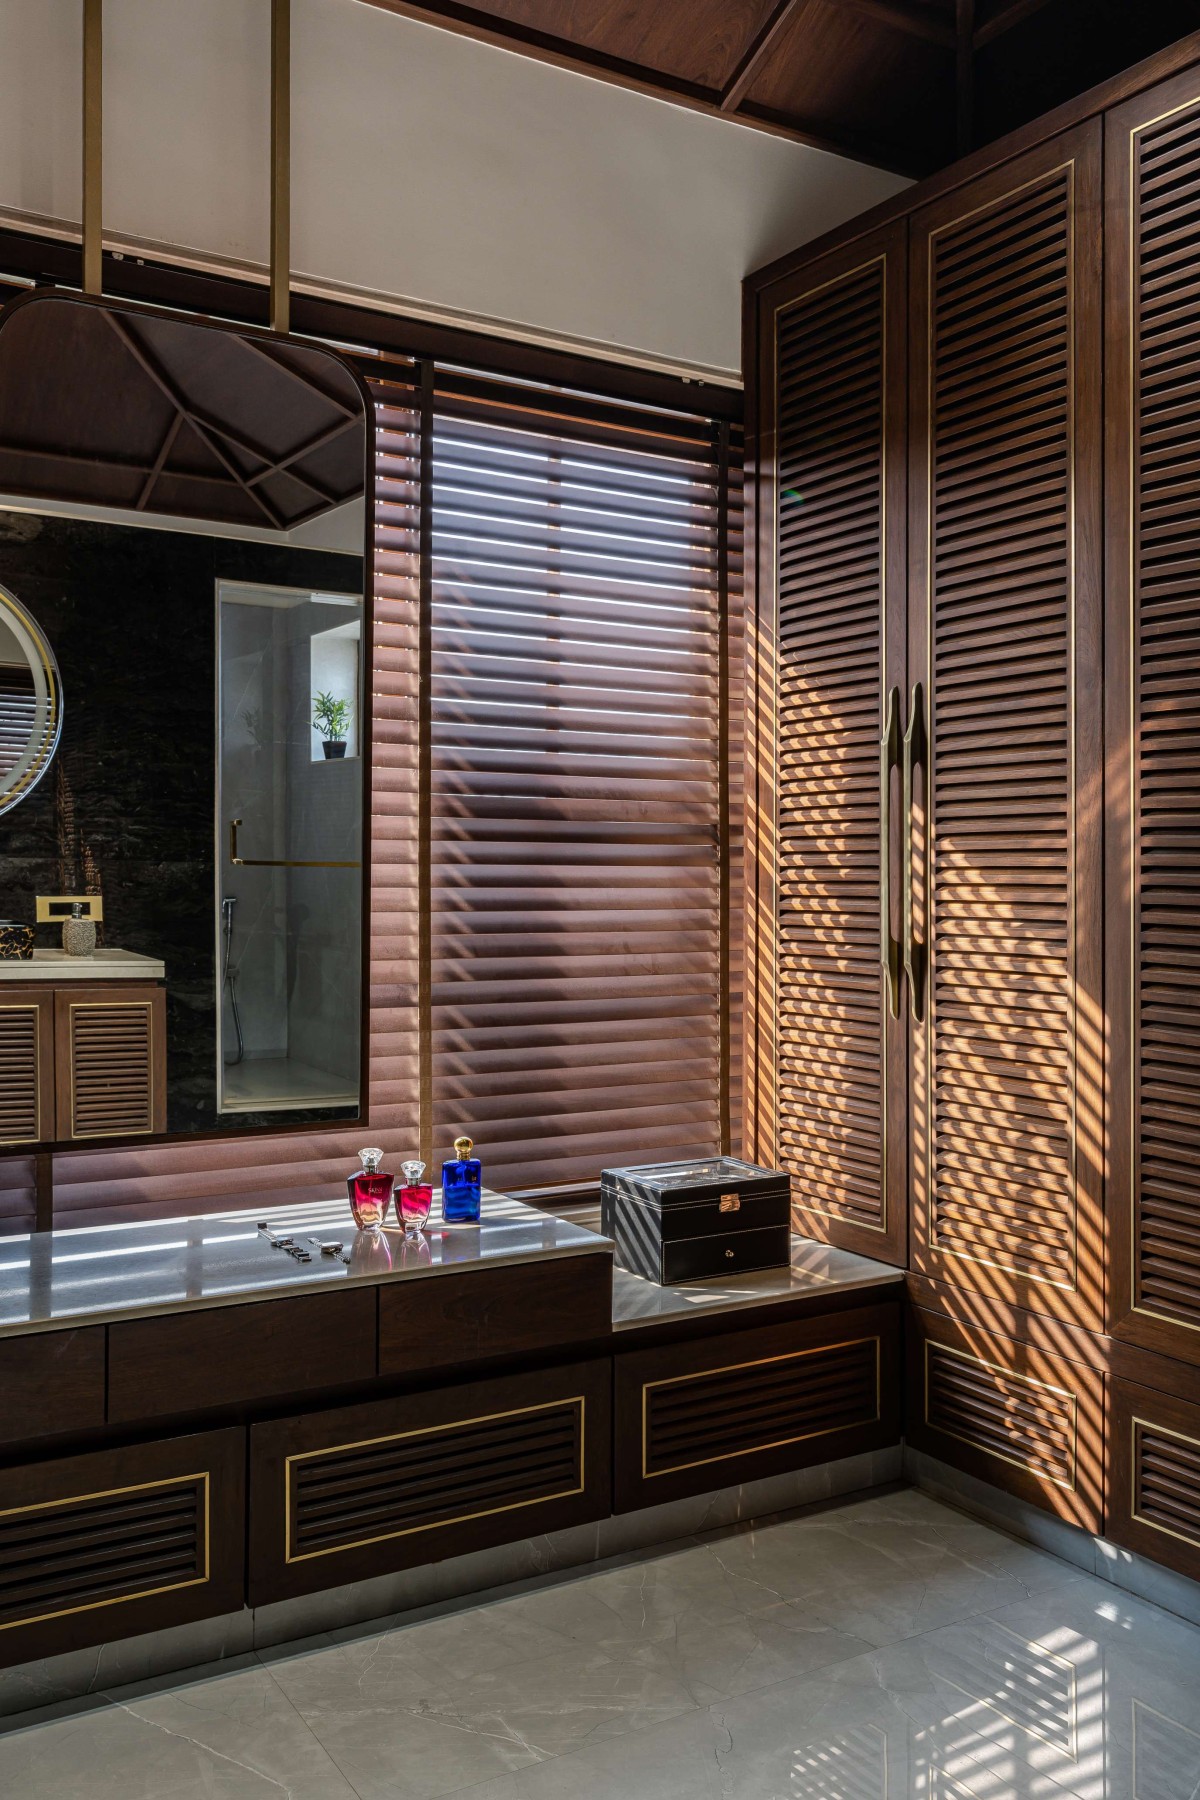 Bathroom of The Quaint Bungalow by Design Salt Studio